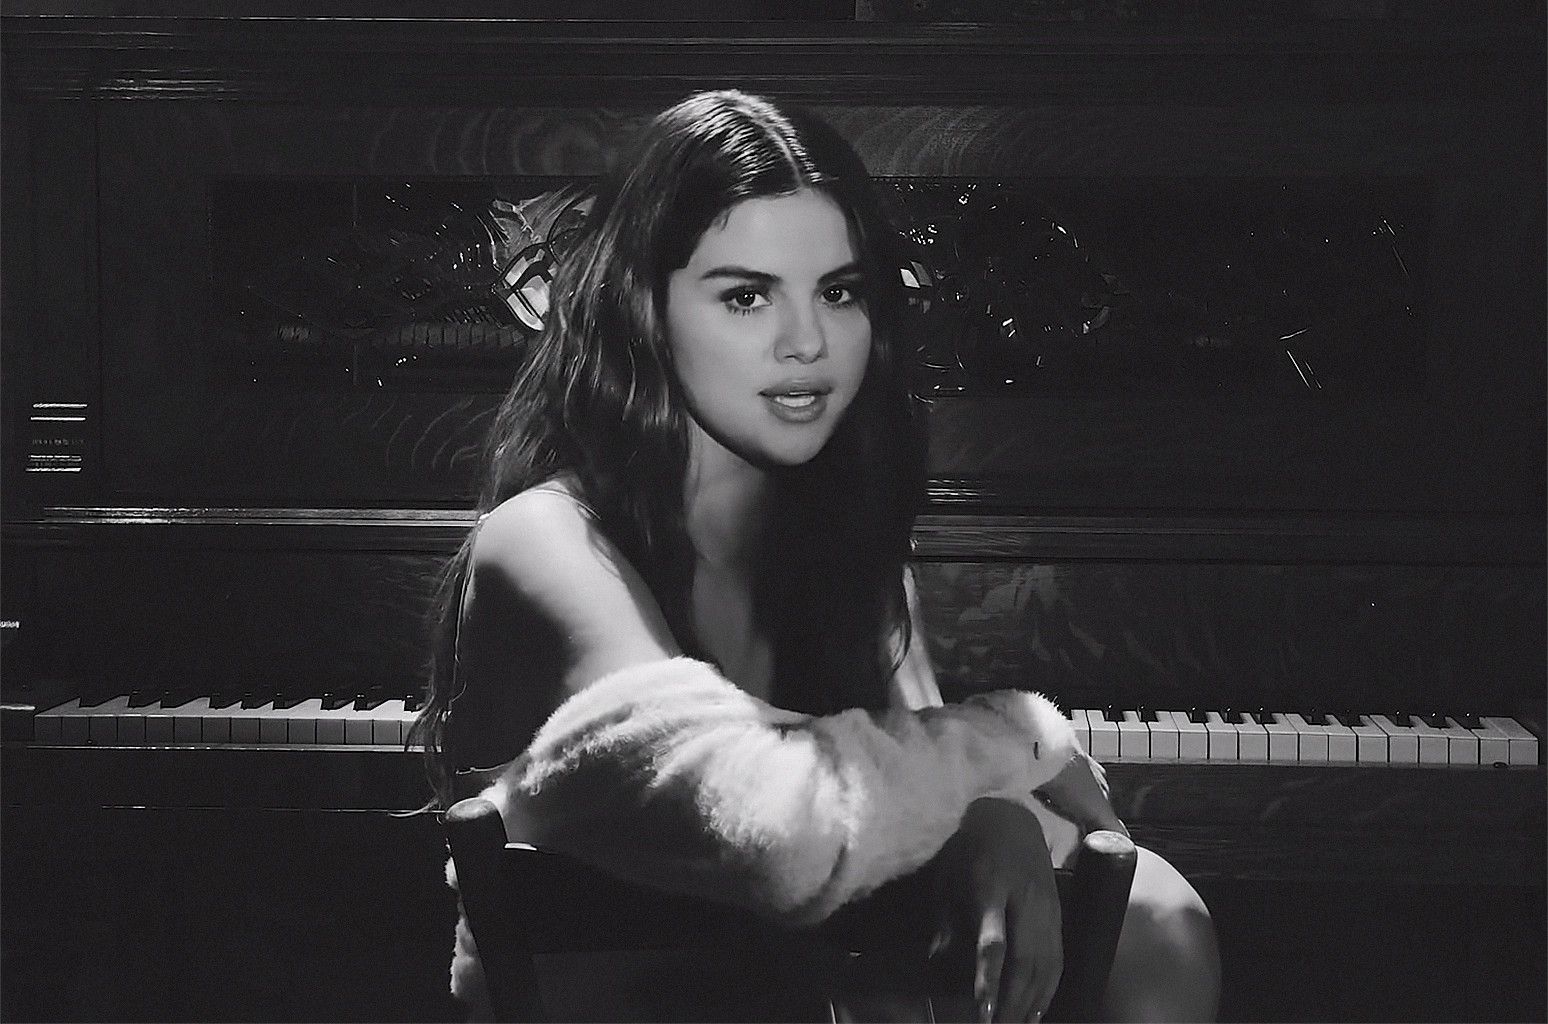 Selena Gomez 'Lose You to Love Me' Alternate Music Video: Watch